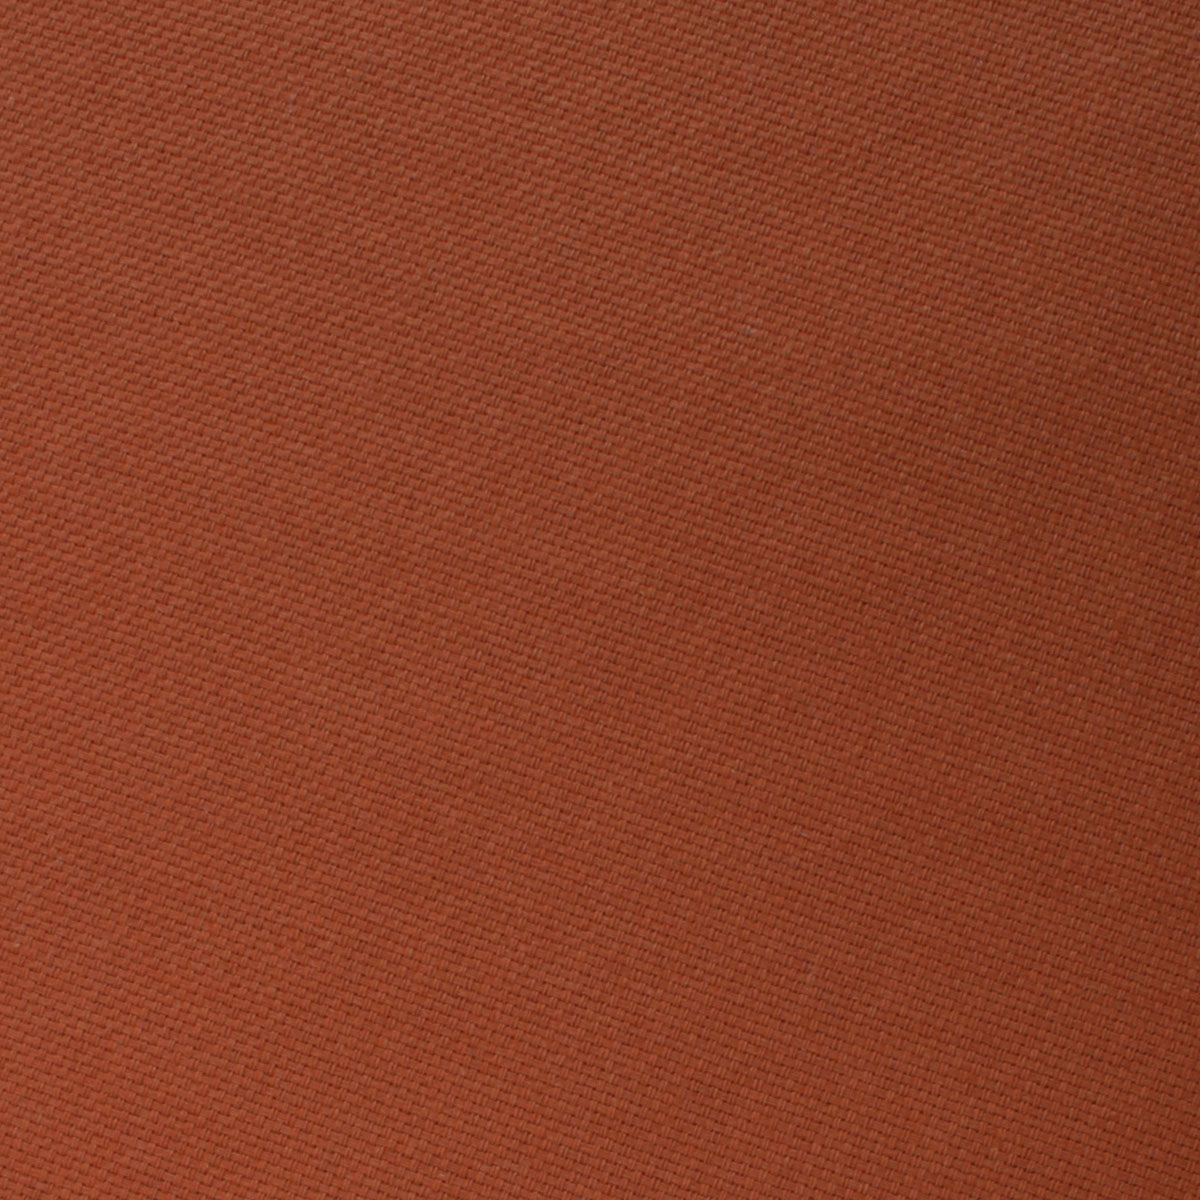 Burnt Terracotta Orange Linen Pocket Square Fabric